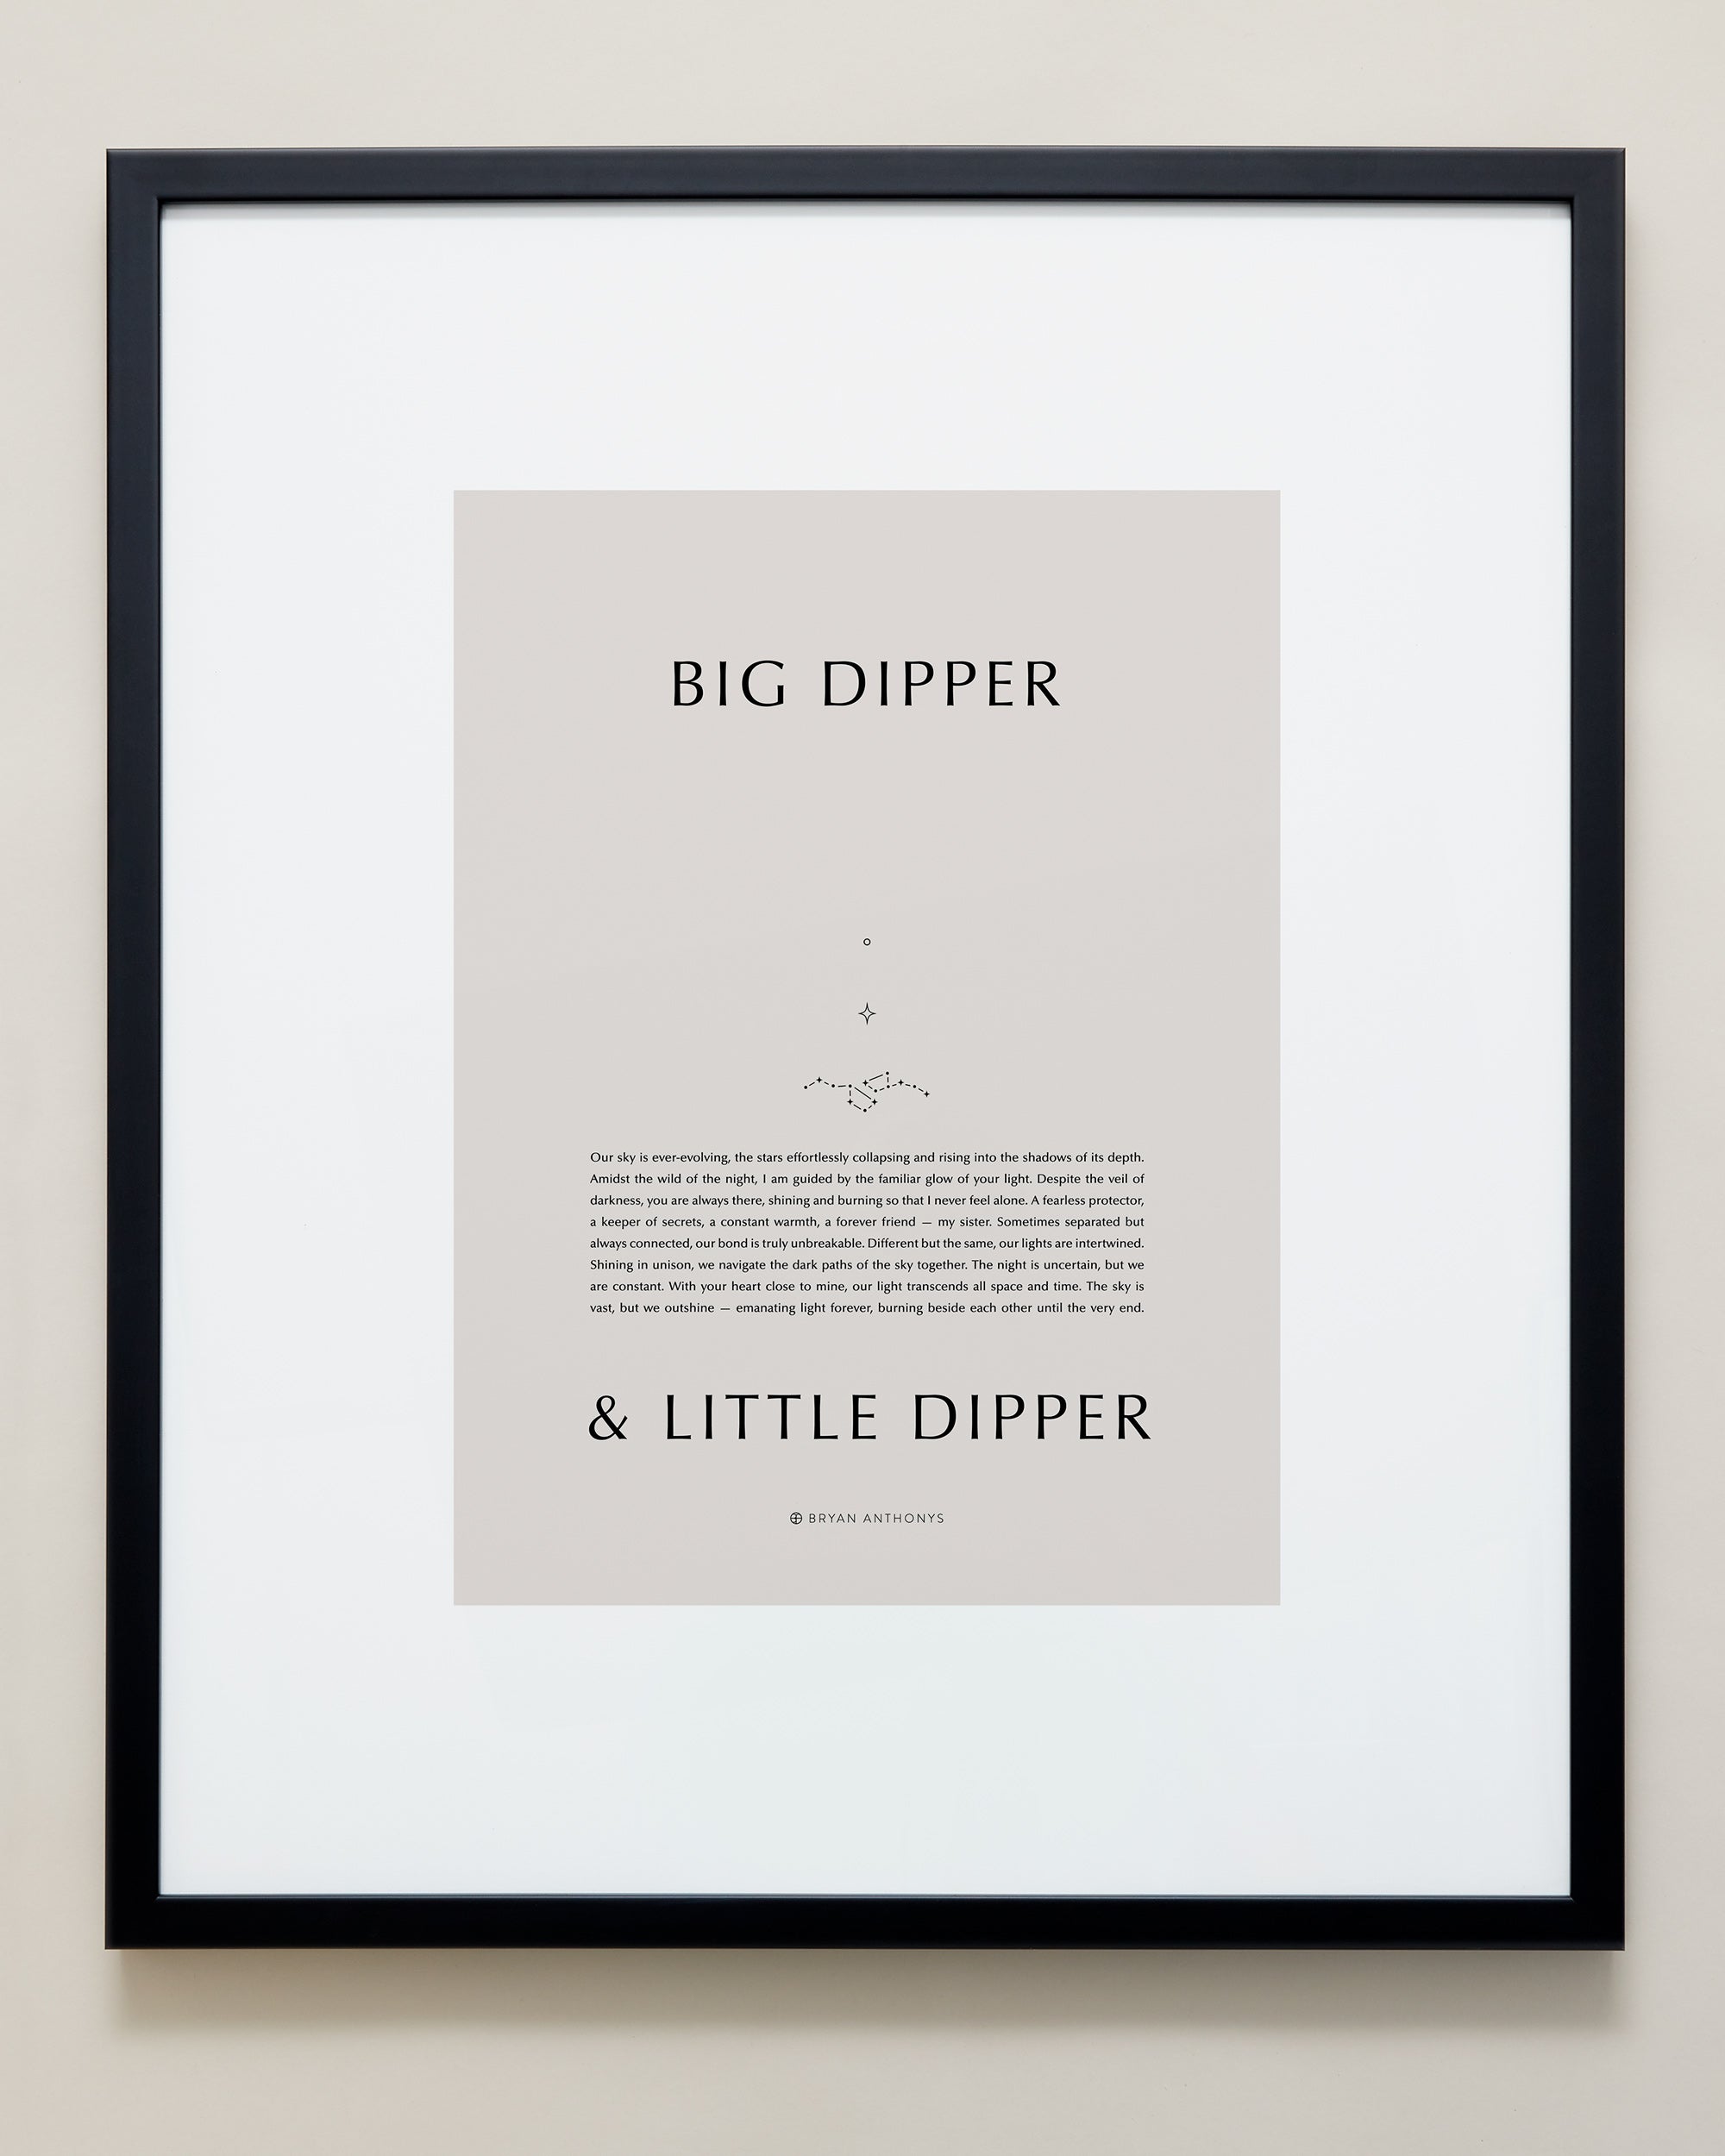 Bryan Anthonys Home Decor Purposeful Prints Big Dipper & Little Dipper Iconic Framed Print Tan Art With Black Frame 20x24